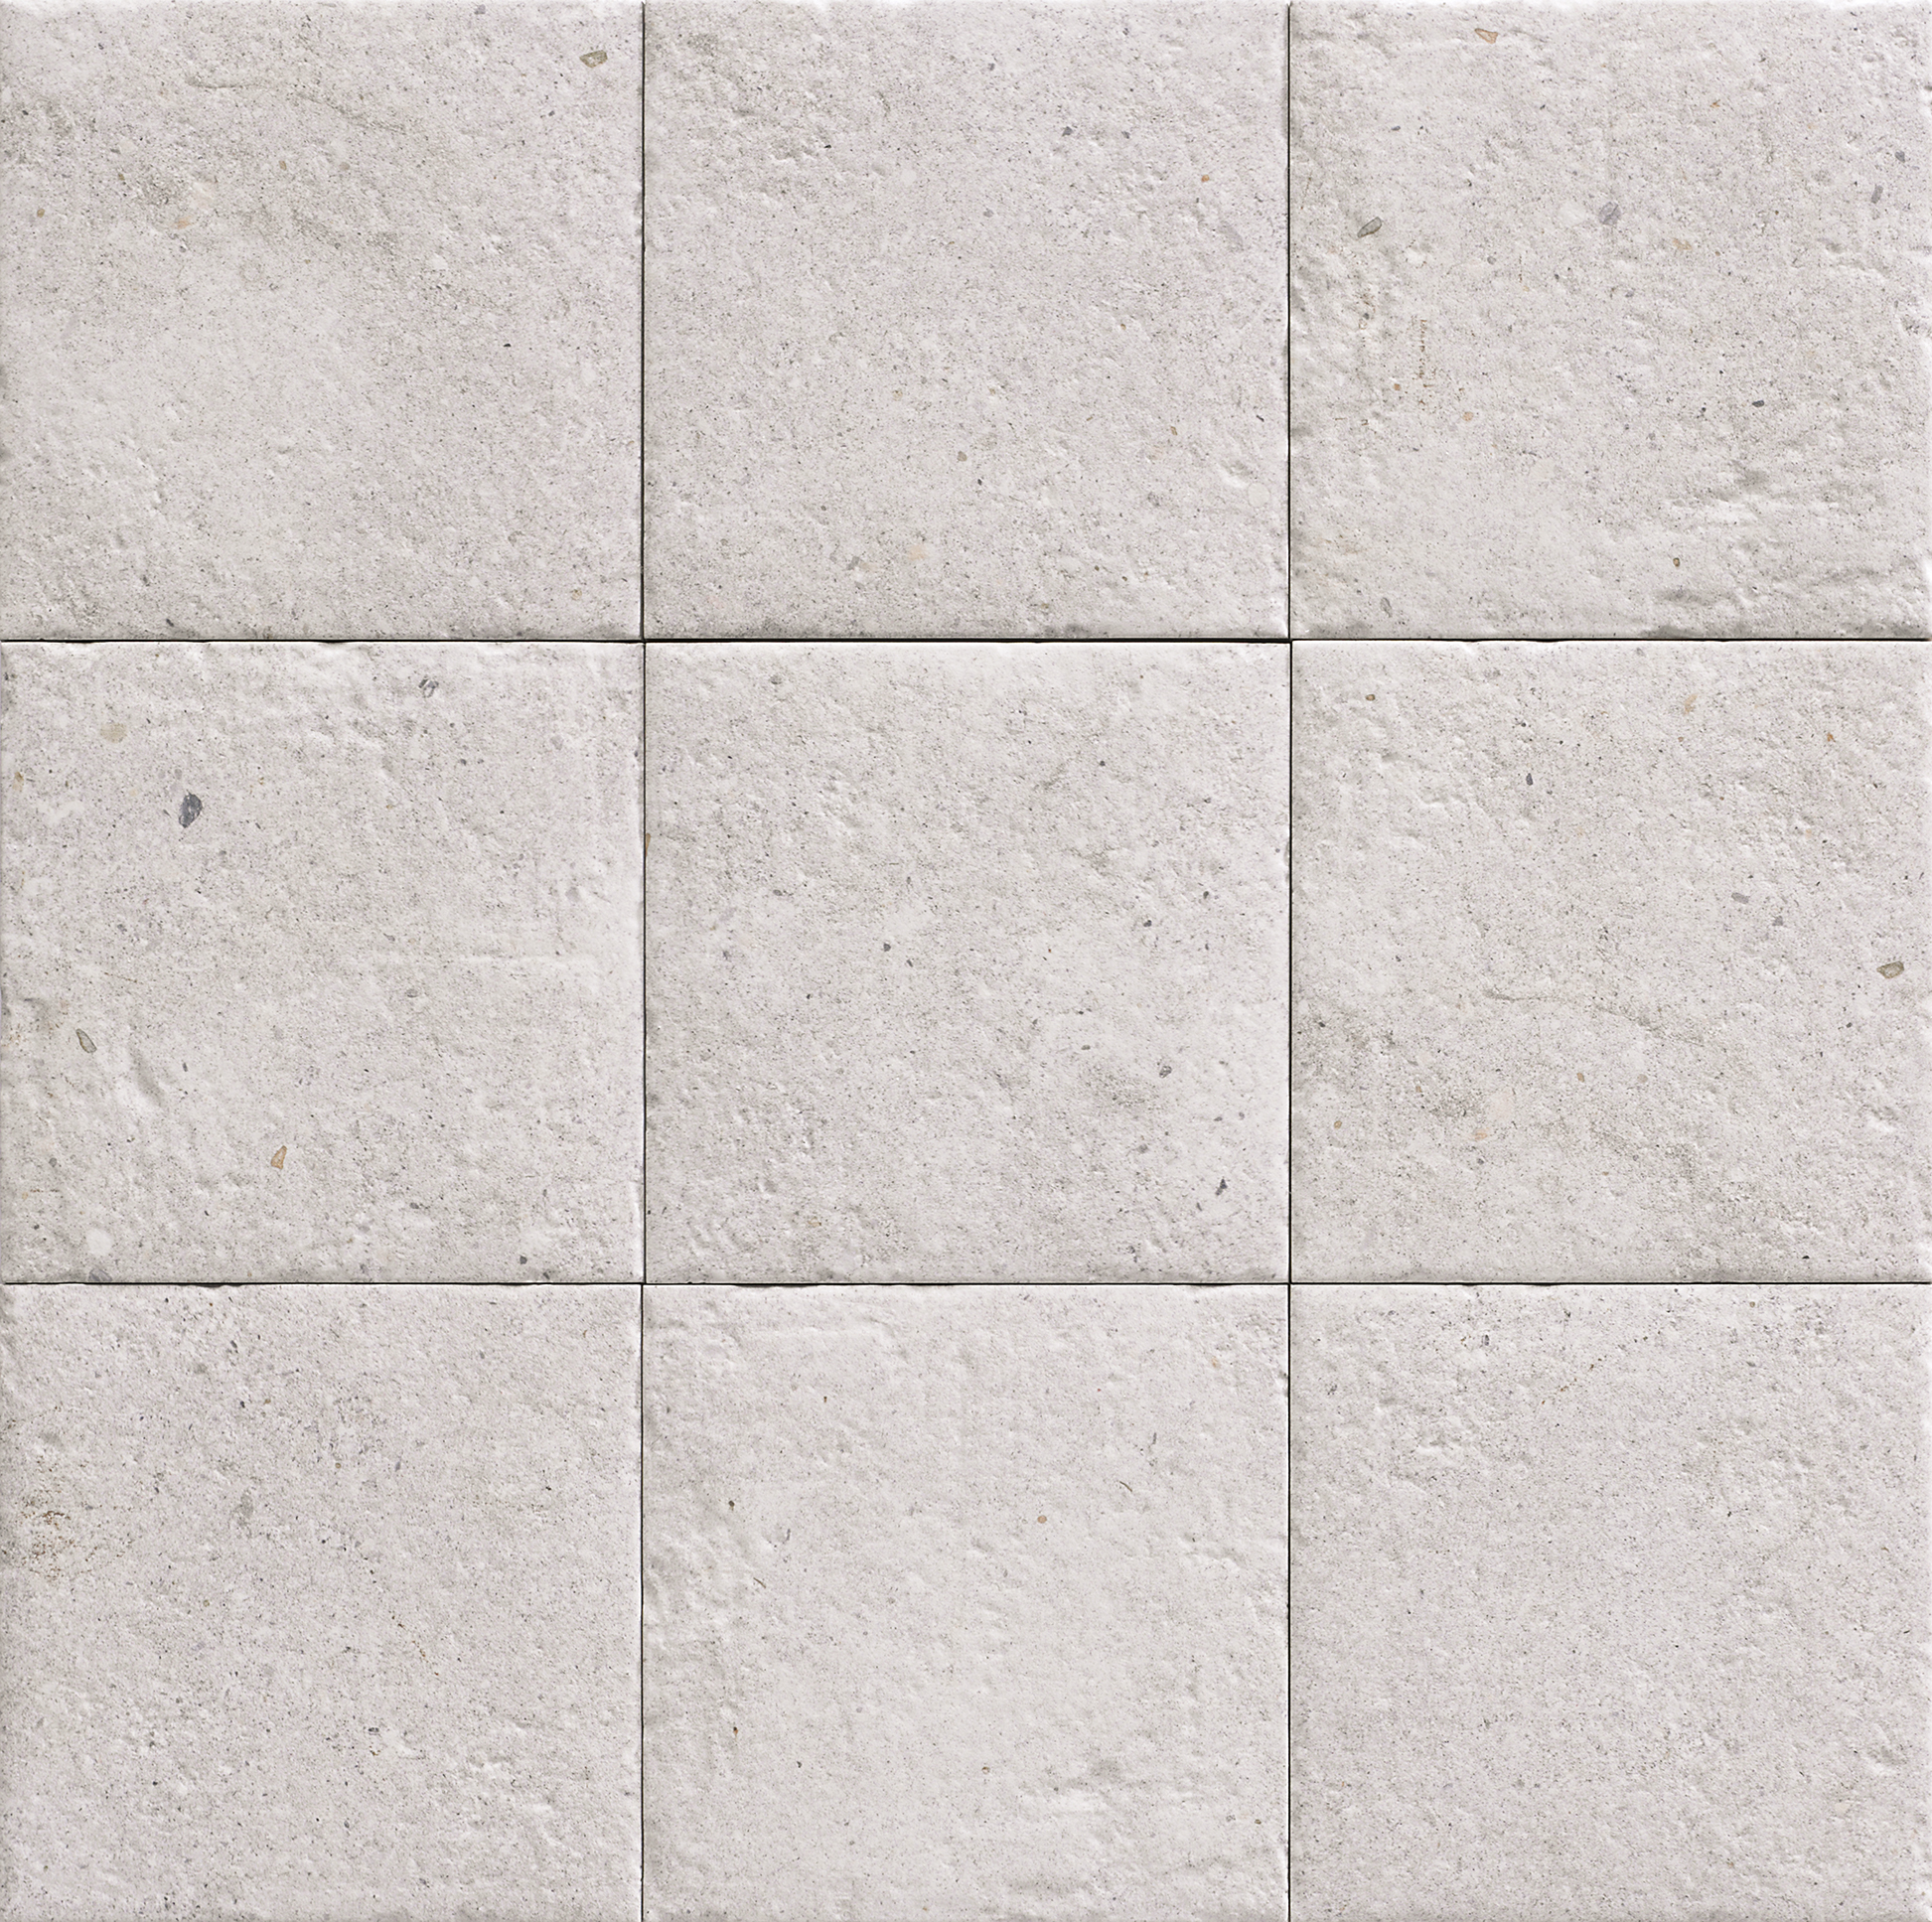 image/catalog/tiles 2021/Bali Stone/WHITE BALI STONE 20X20.jpg